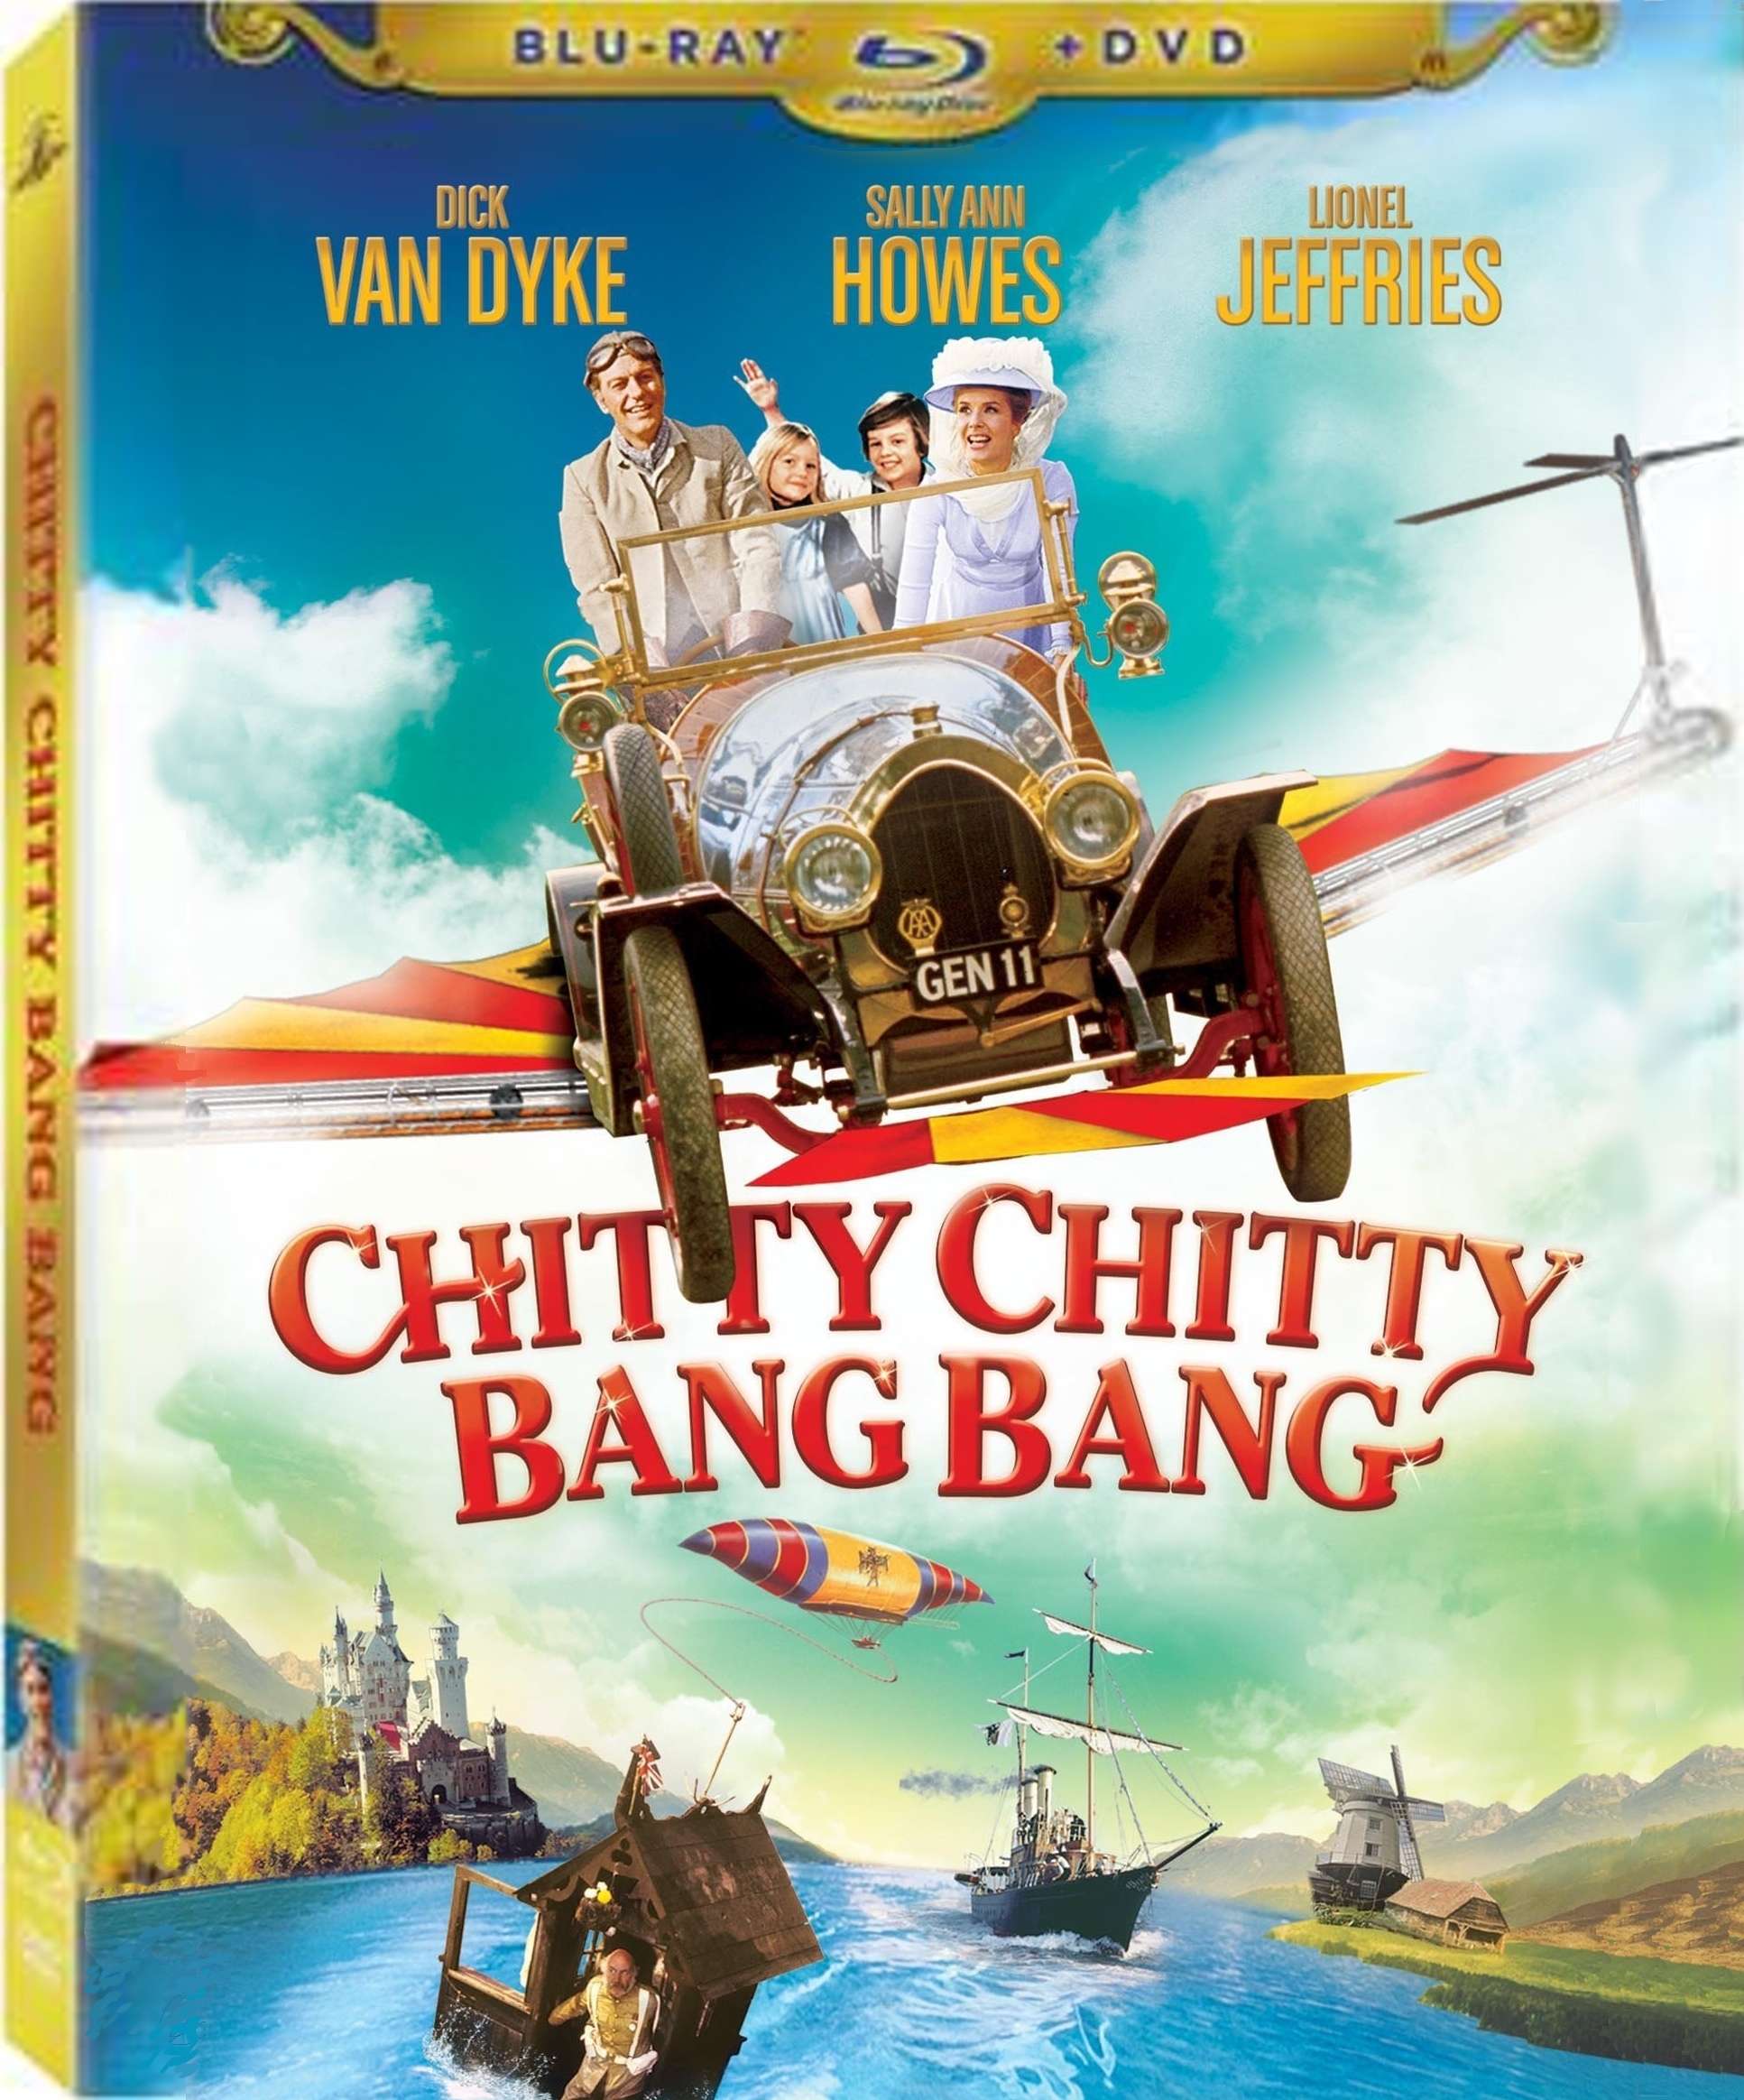 Chitty Chitty Bang Bang (1968) FullHD 1080p DTS Ac3 ITA DTS-HD MA Ac3 ENG Subs x264